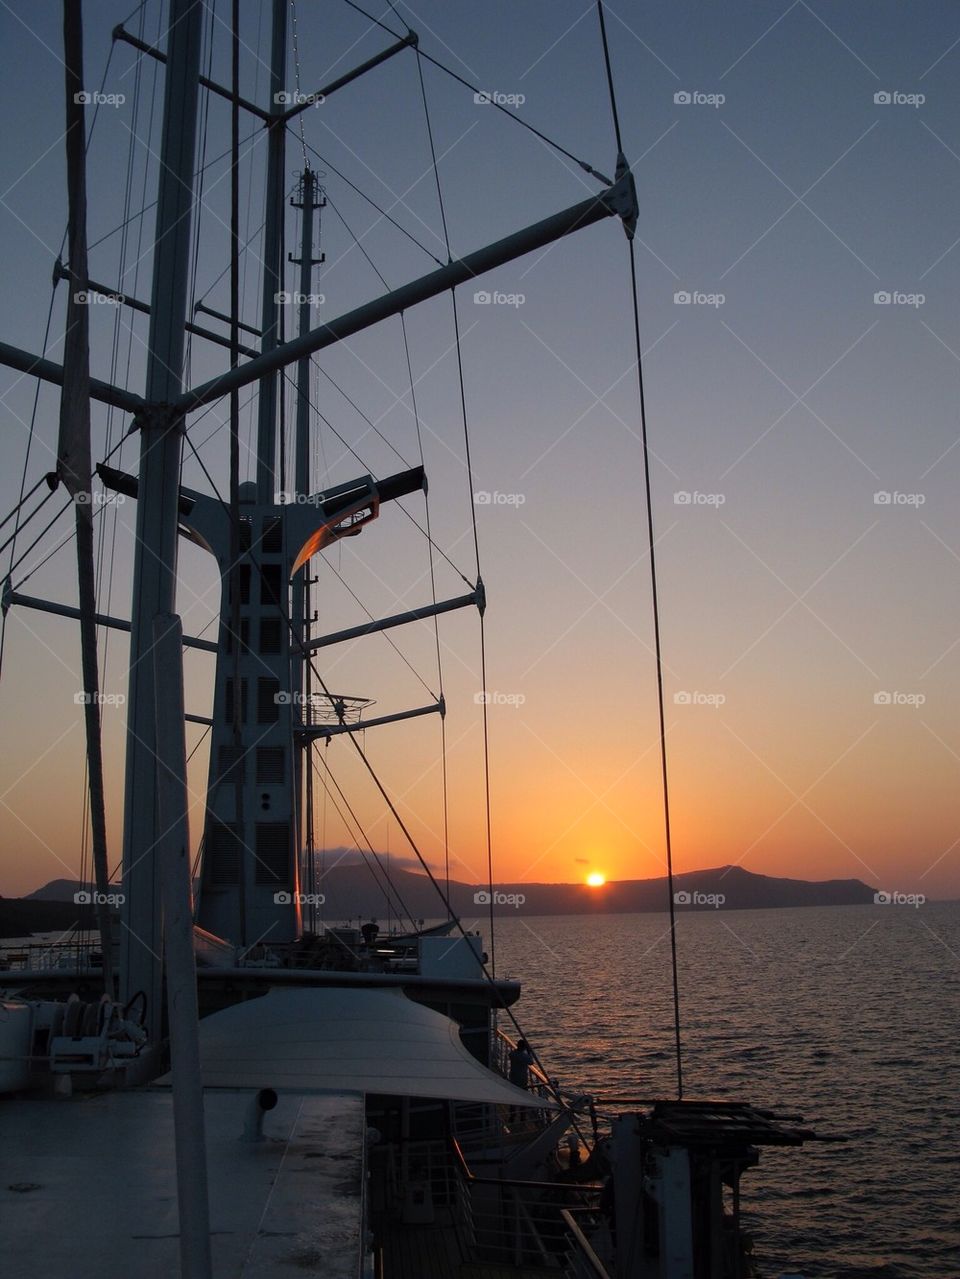 Windstar greek sunset